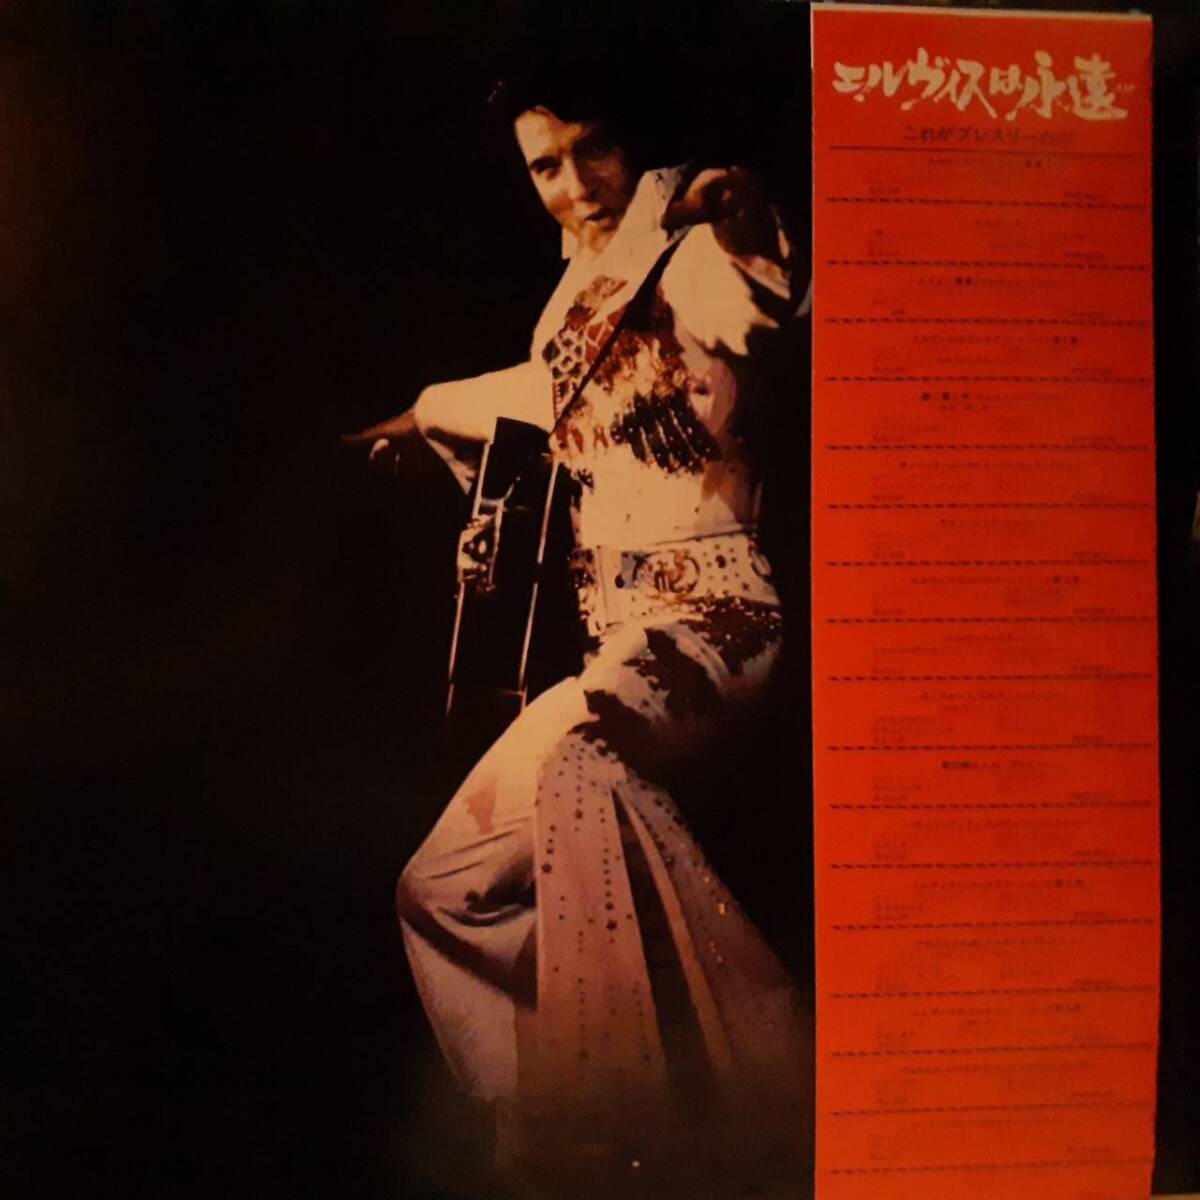 PROMO日本RCA盤2LP帯付き 見本盤 Elvis Presley / Elvis In Concert '77 1977年 RCA-9139~40 エルヴィス・プレスリー イン・コンサート'77_画像4